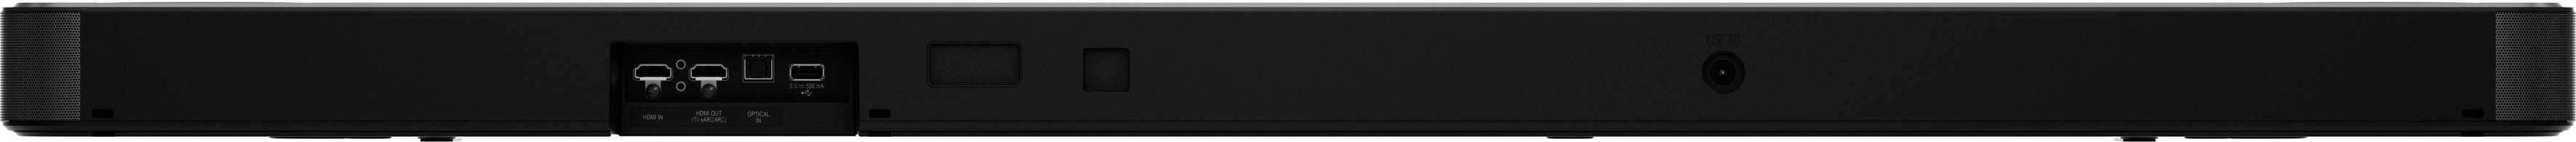 LG SPD75YA 3.1.2 400 (WiFi), (Bluetooth, WLAN W) Soundbar